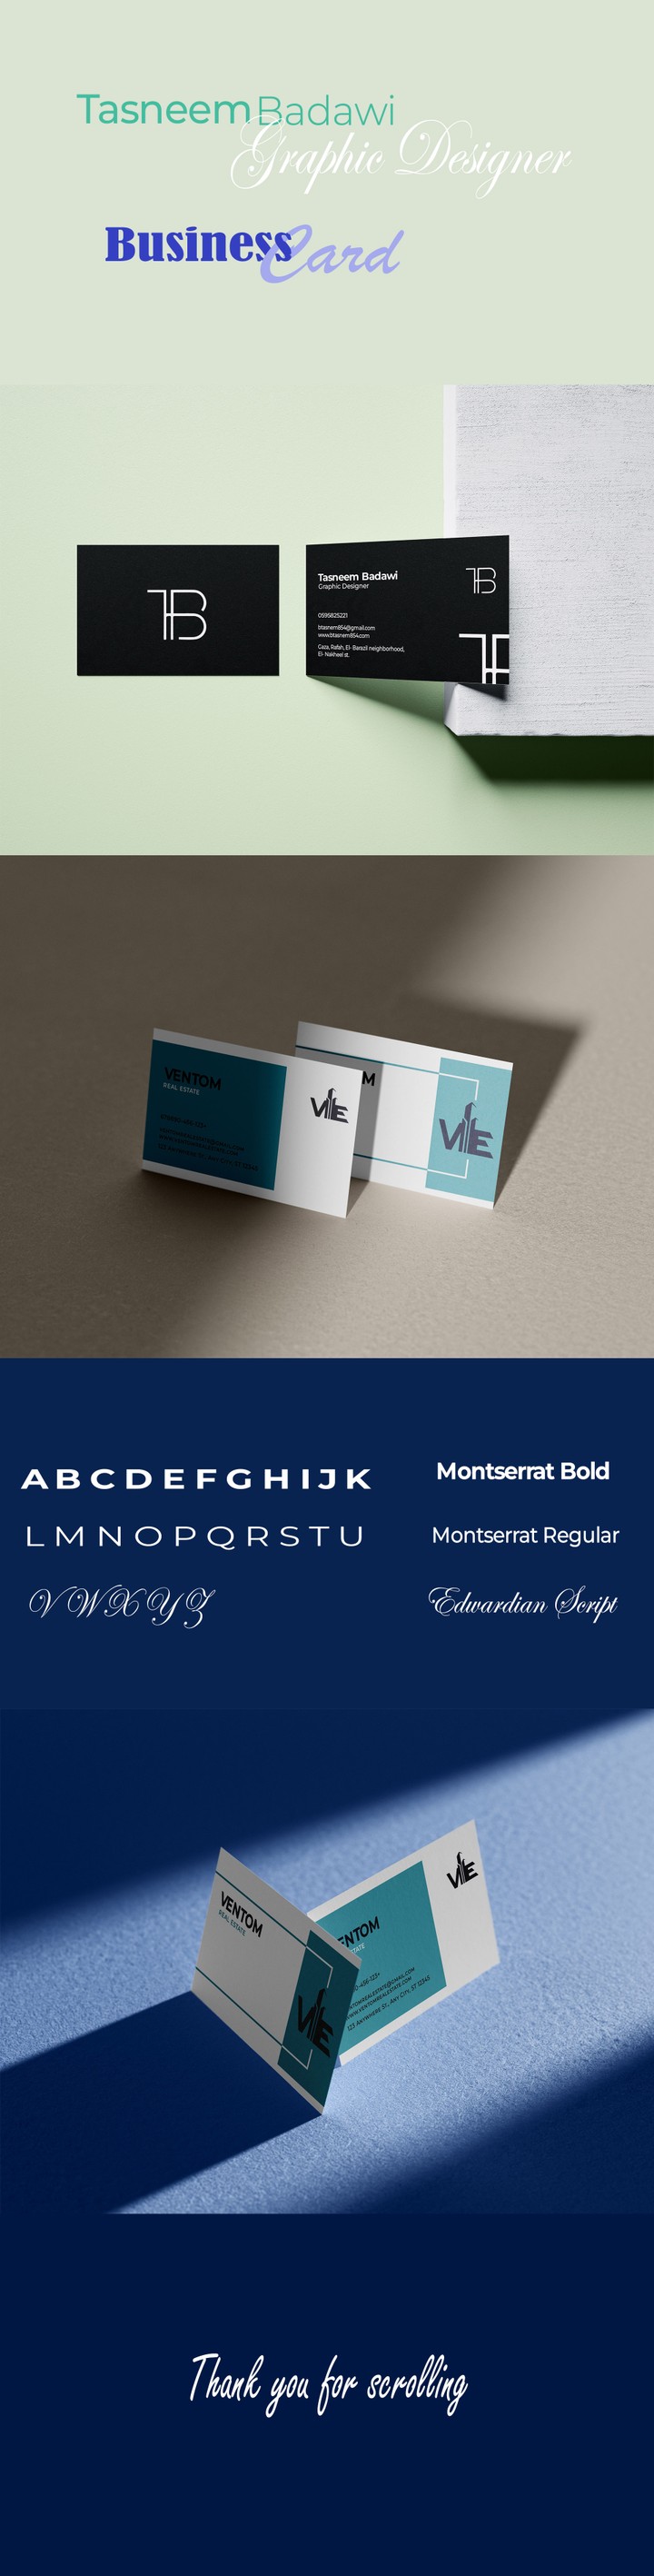 Business card & Mockup